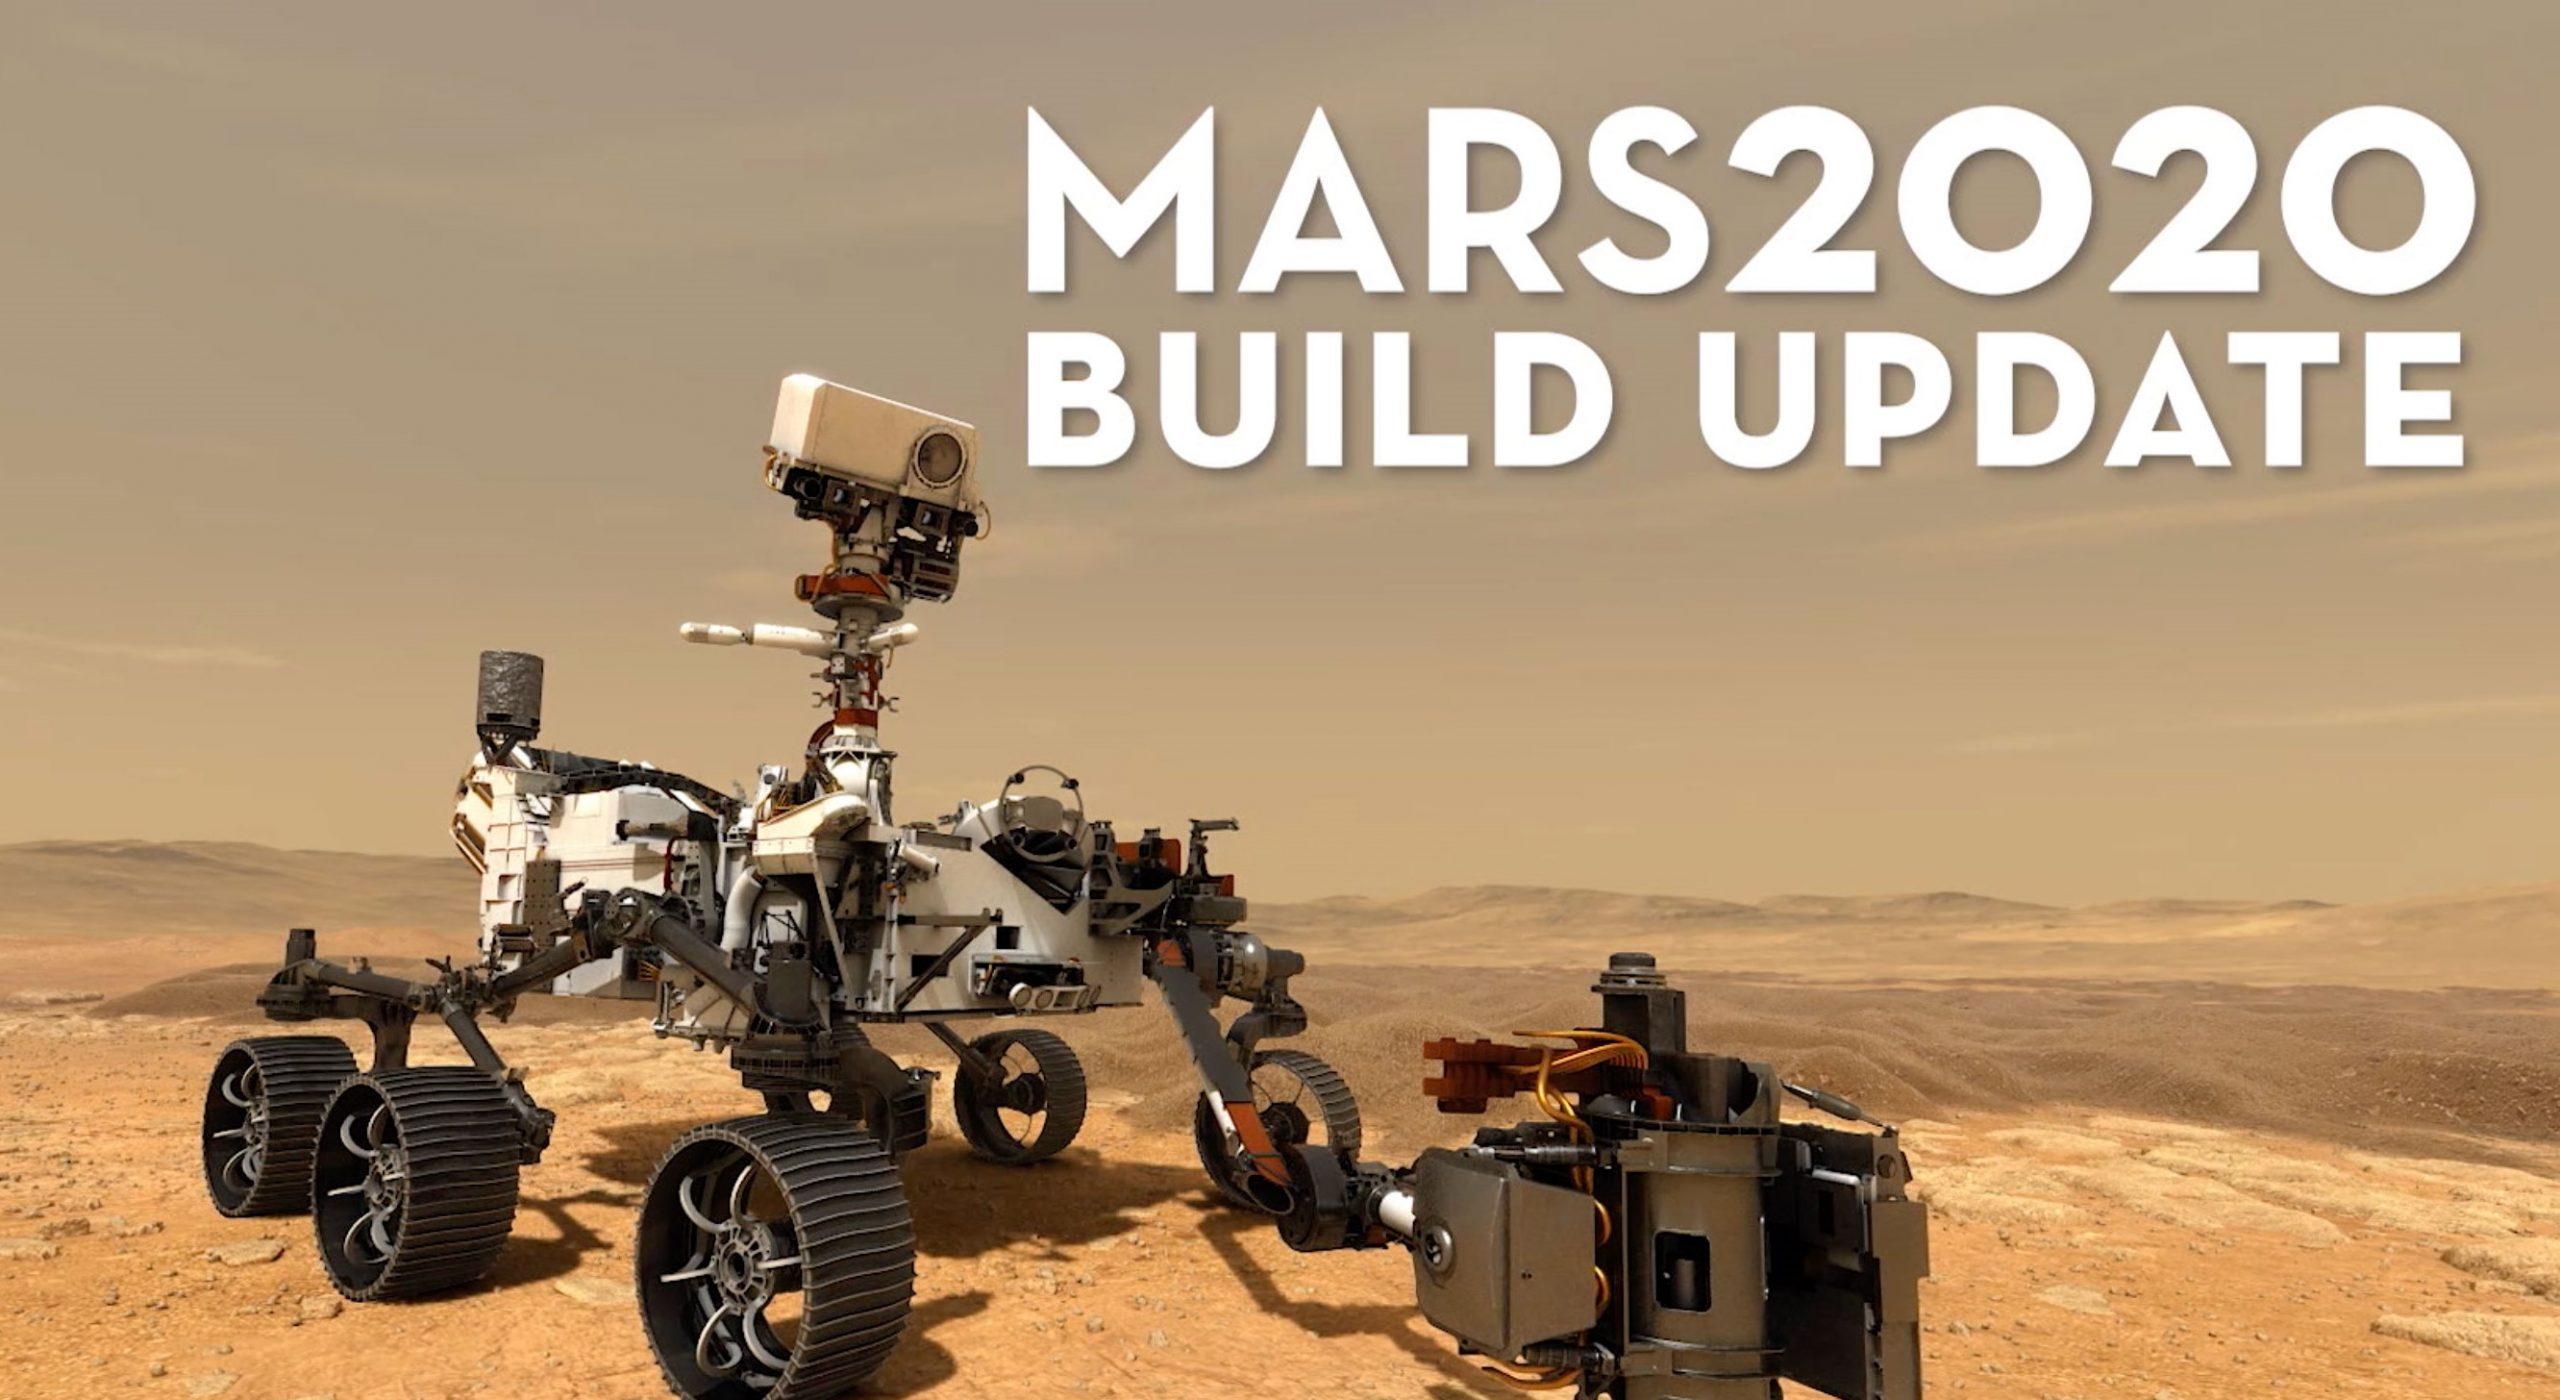 NASA will launch rover "Mars 2020" in 2020_40.1